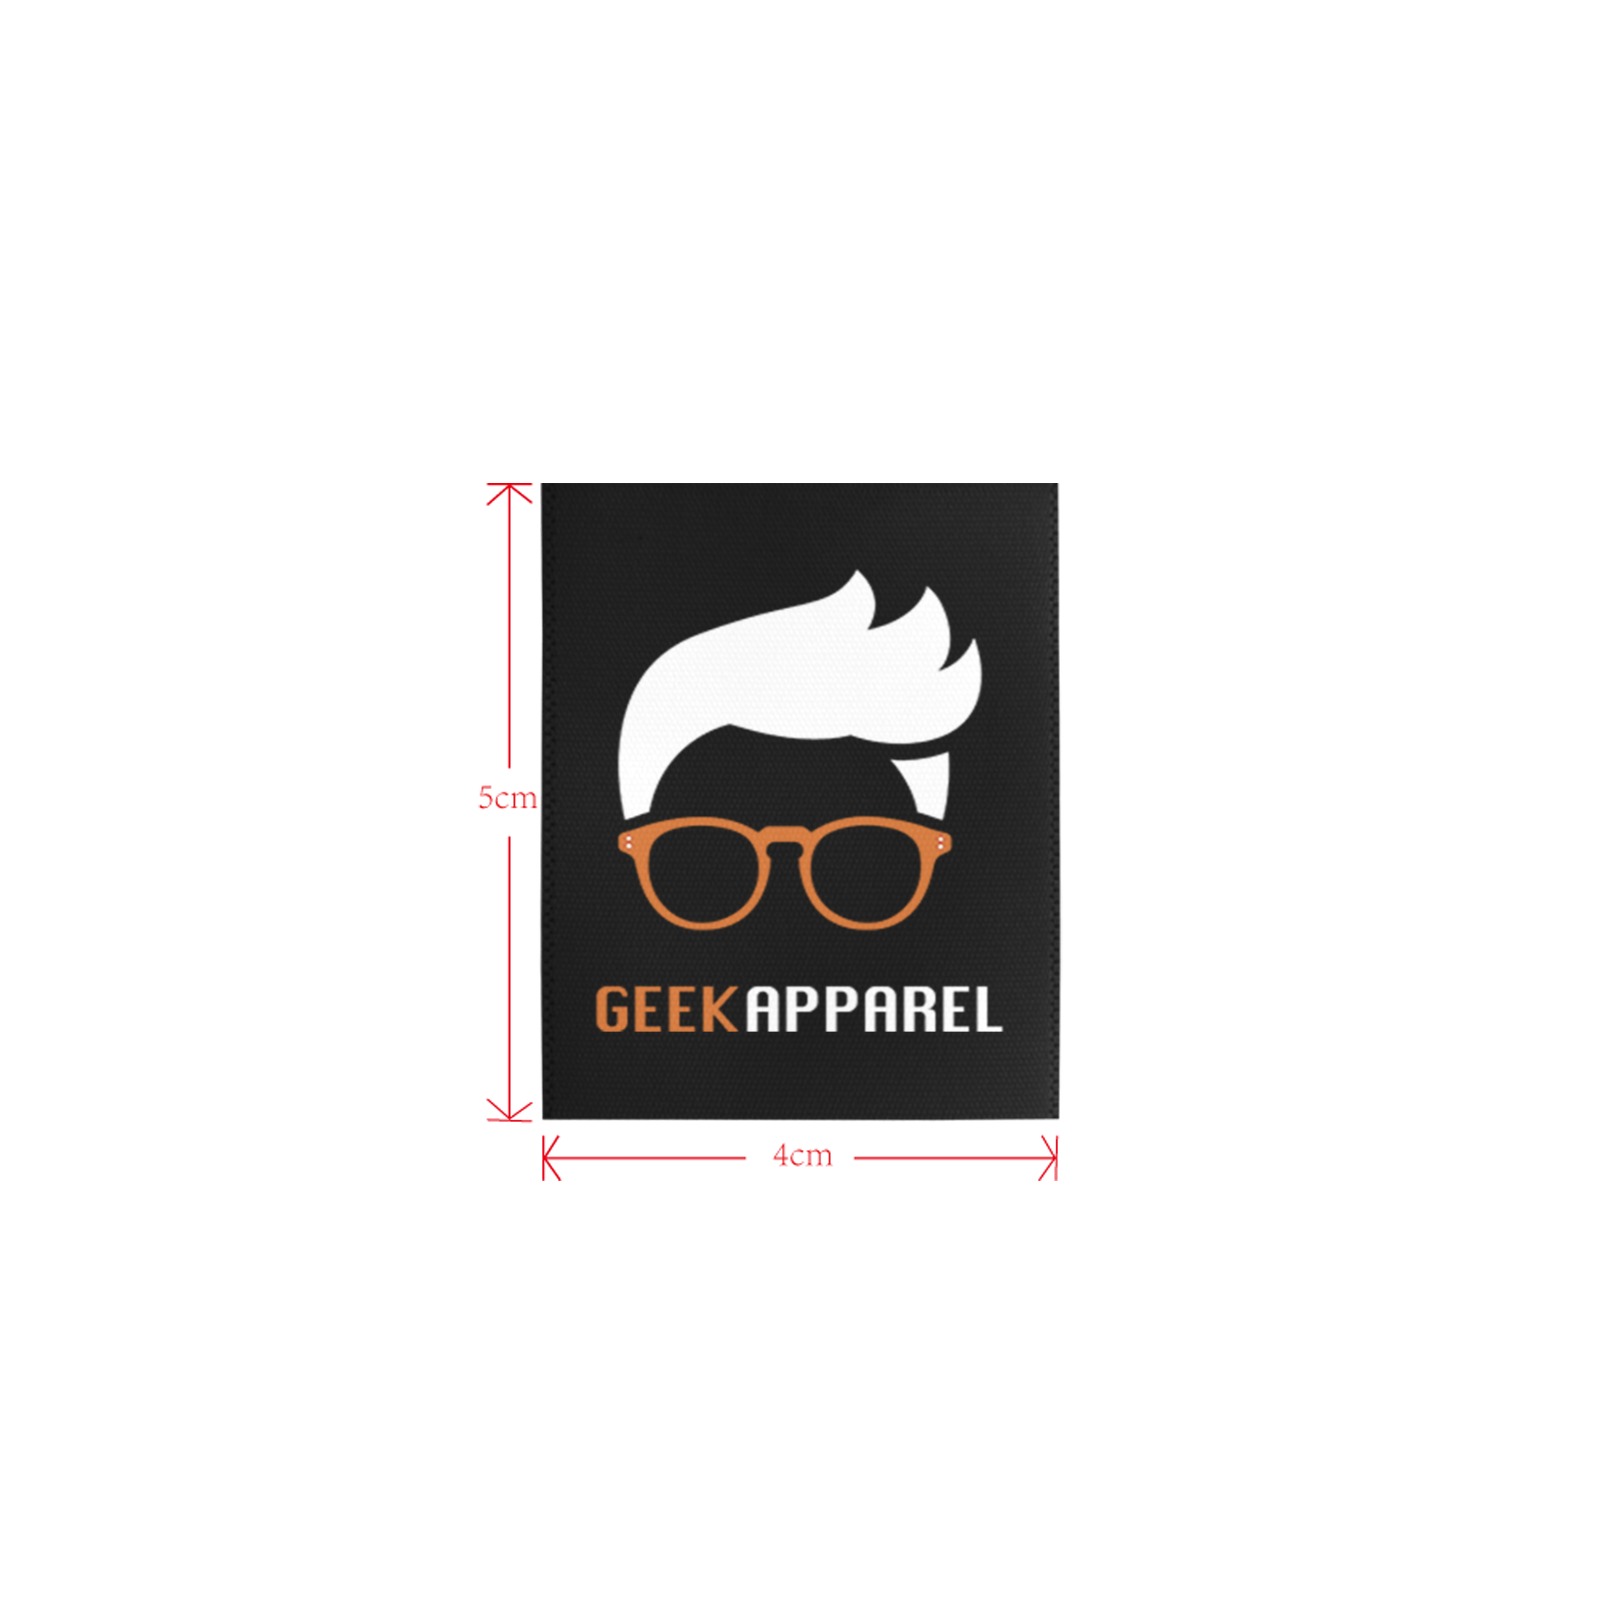 Geek_Apparel_logo Tag Private Brand Tag on Tops (4cm X 5cm)